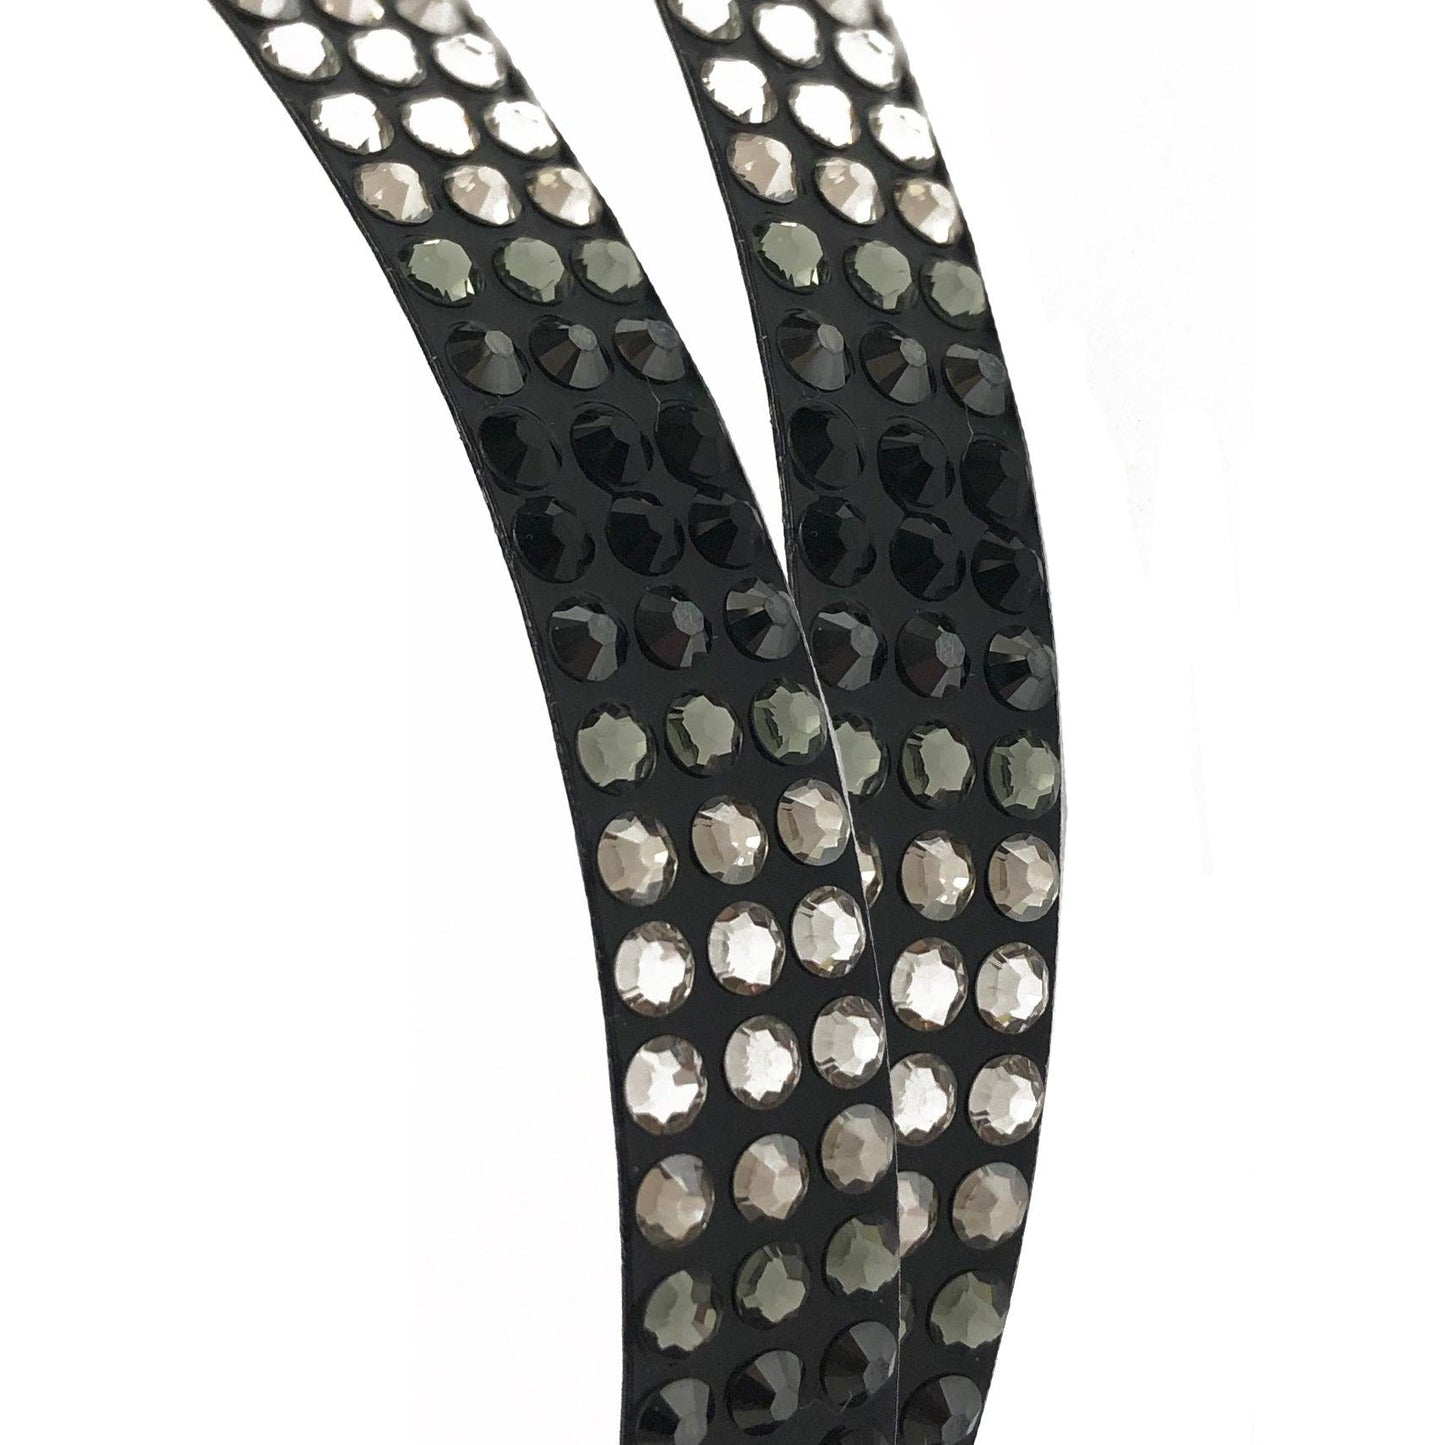 Swarovski CrystalTex Chaton Banding - Monochrome (Sold Per Inch) - Too Cute Beads